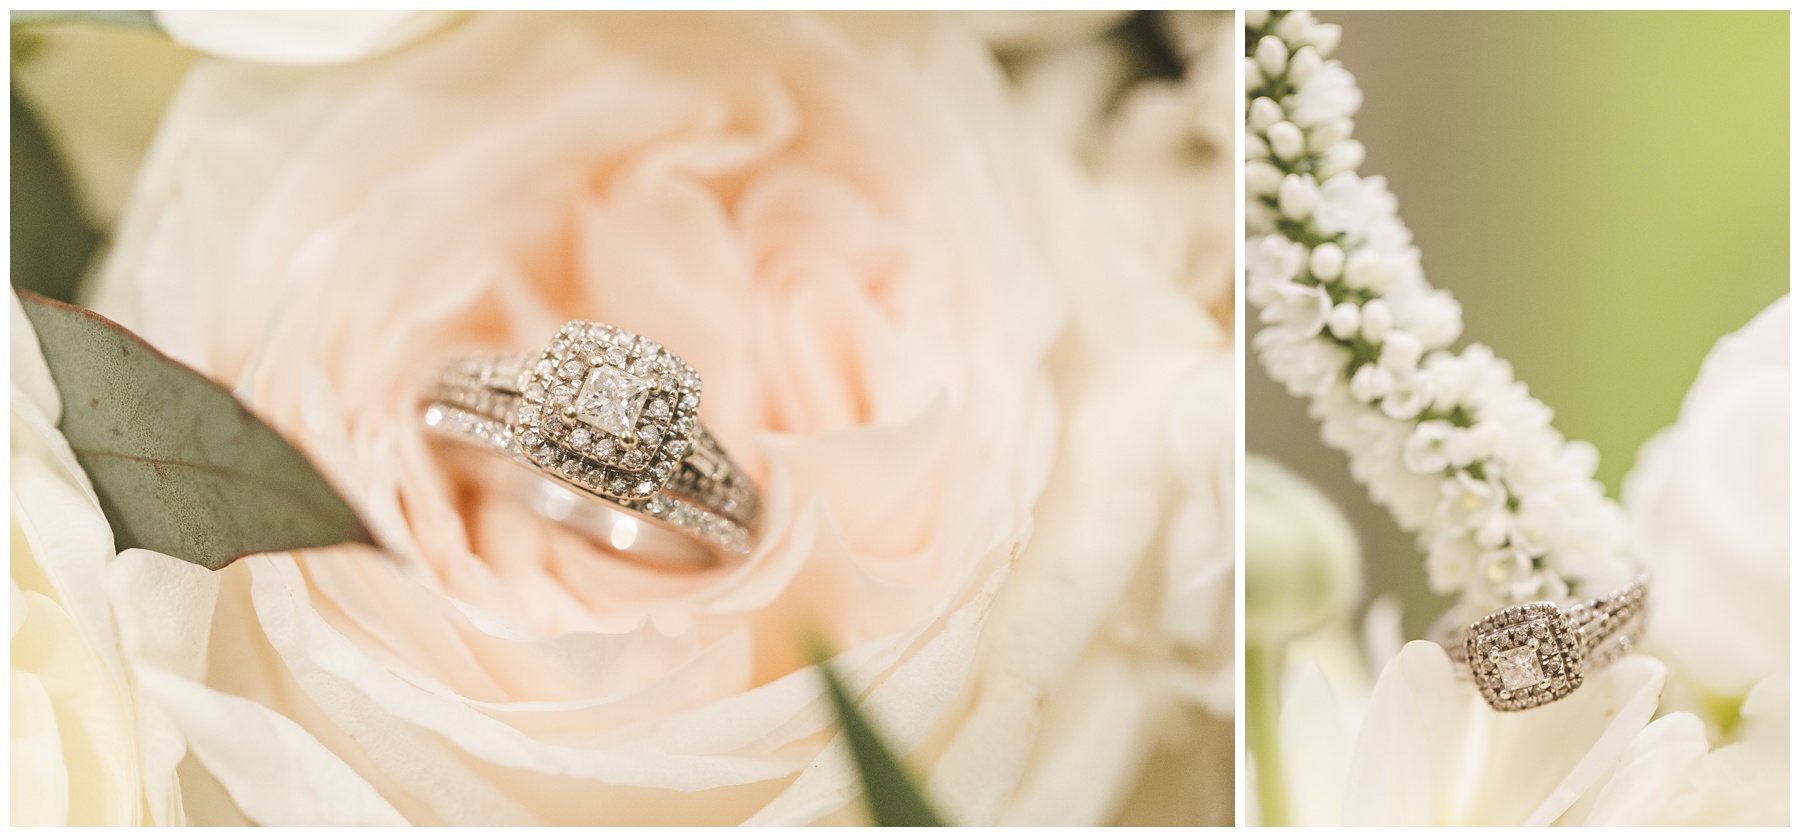 wedding ring detail shots in flowers in Boise Idaho